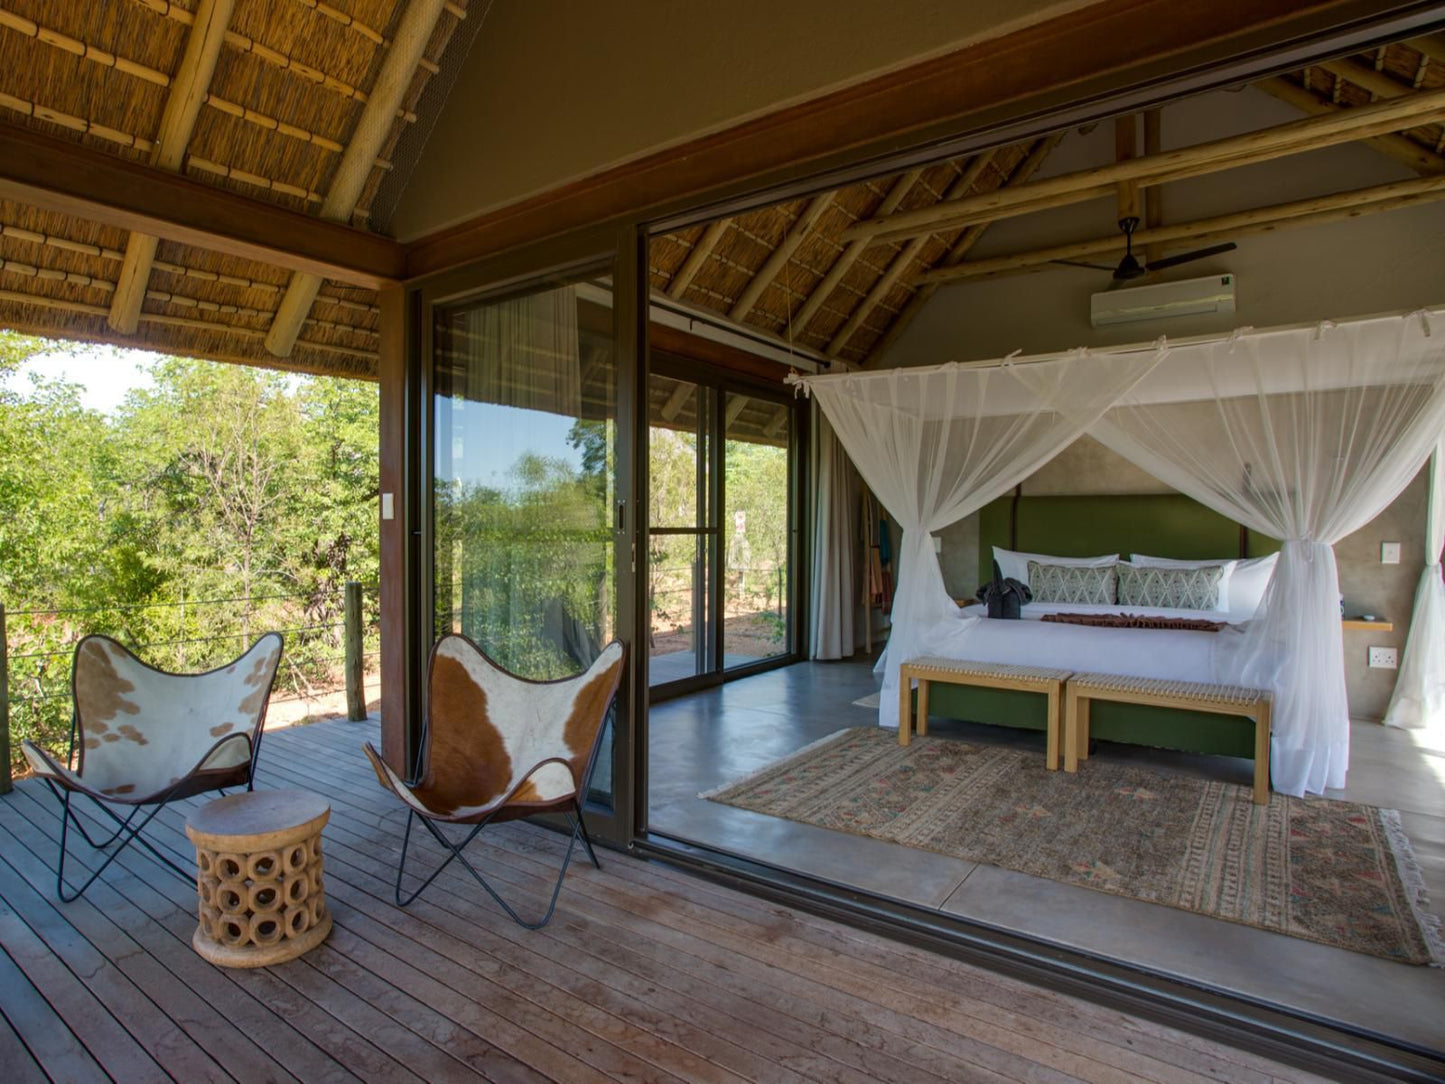 Mafunyane Lodge Klaserie Private Nature Reserve Mpumalanga South Africa Bedroom